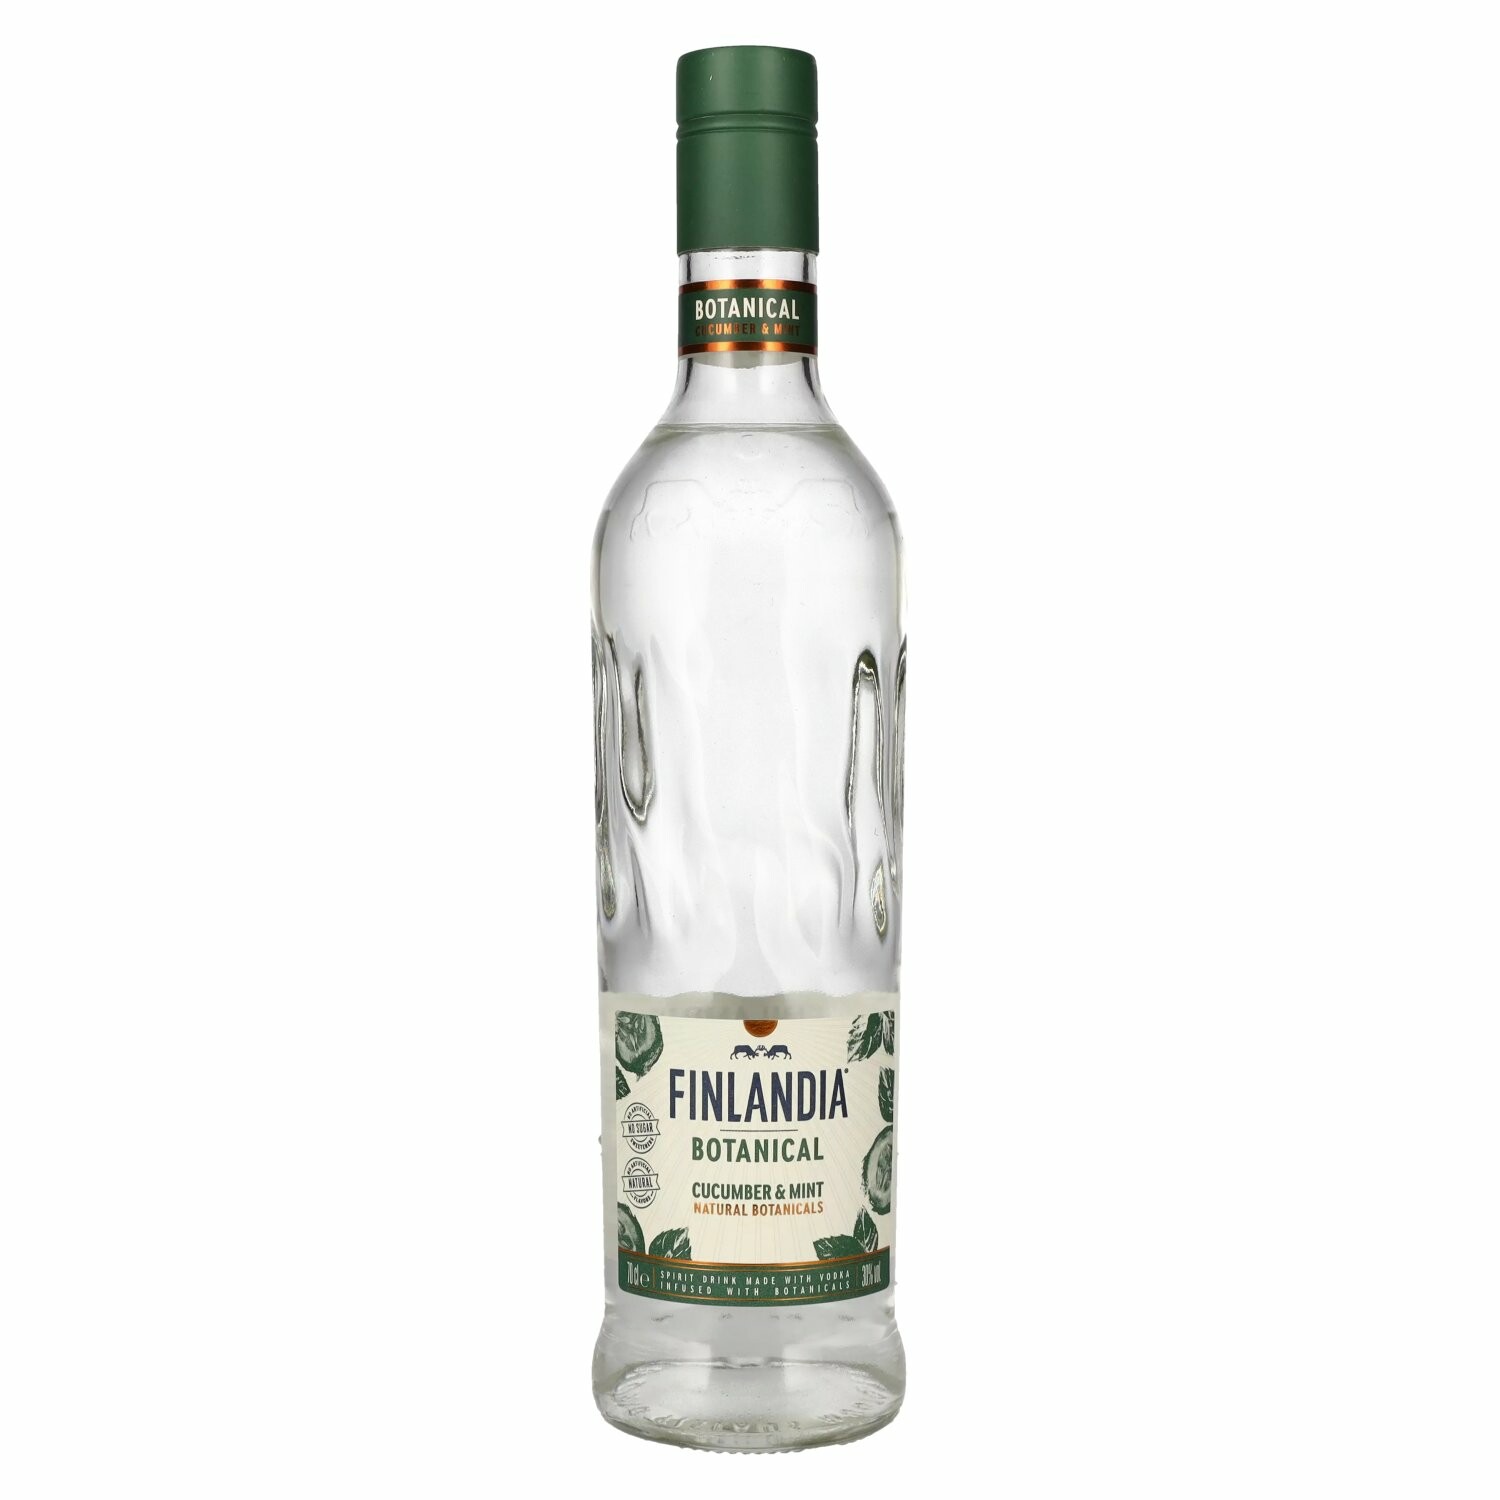 Finlandia Botanical Cucumber & Mint 30% Vol. 0,7l